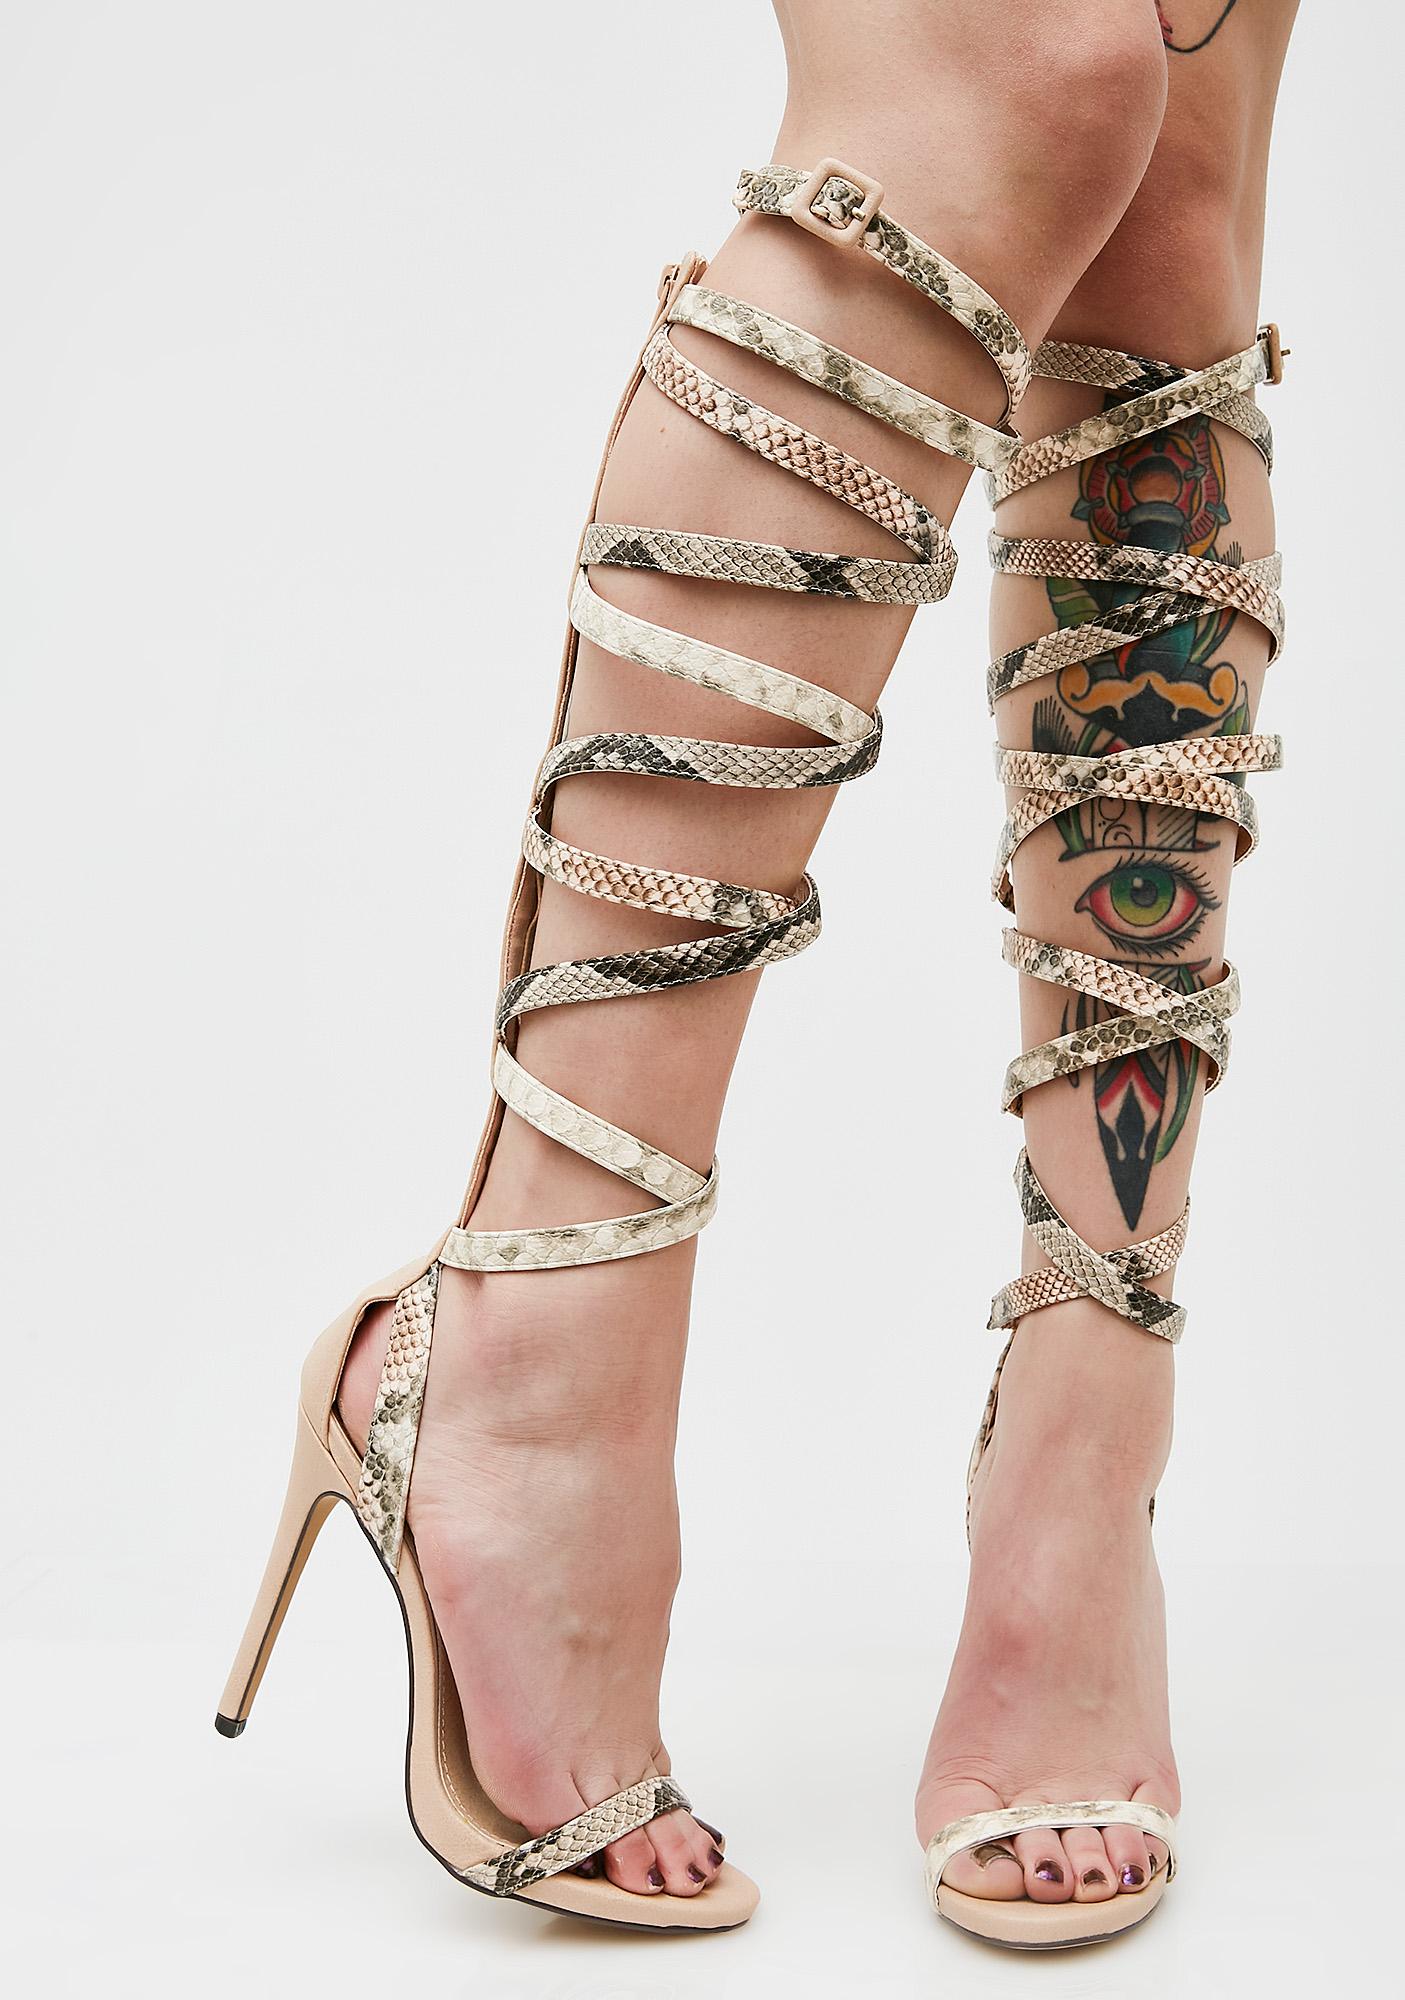 heels that wrap around your leg